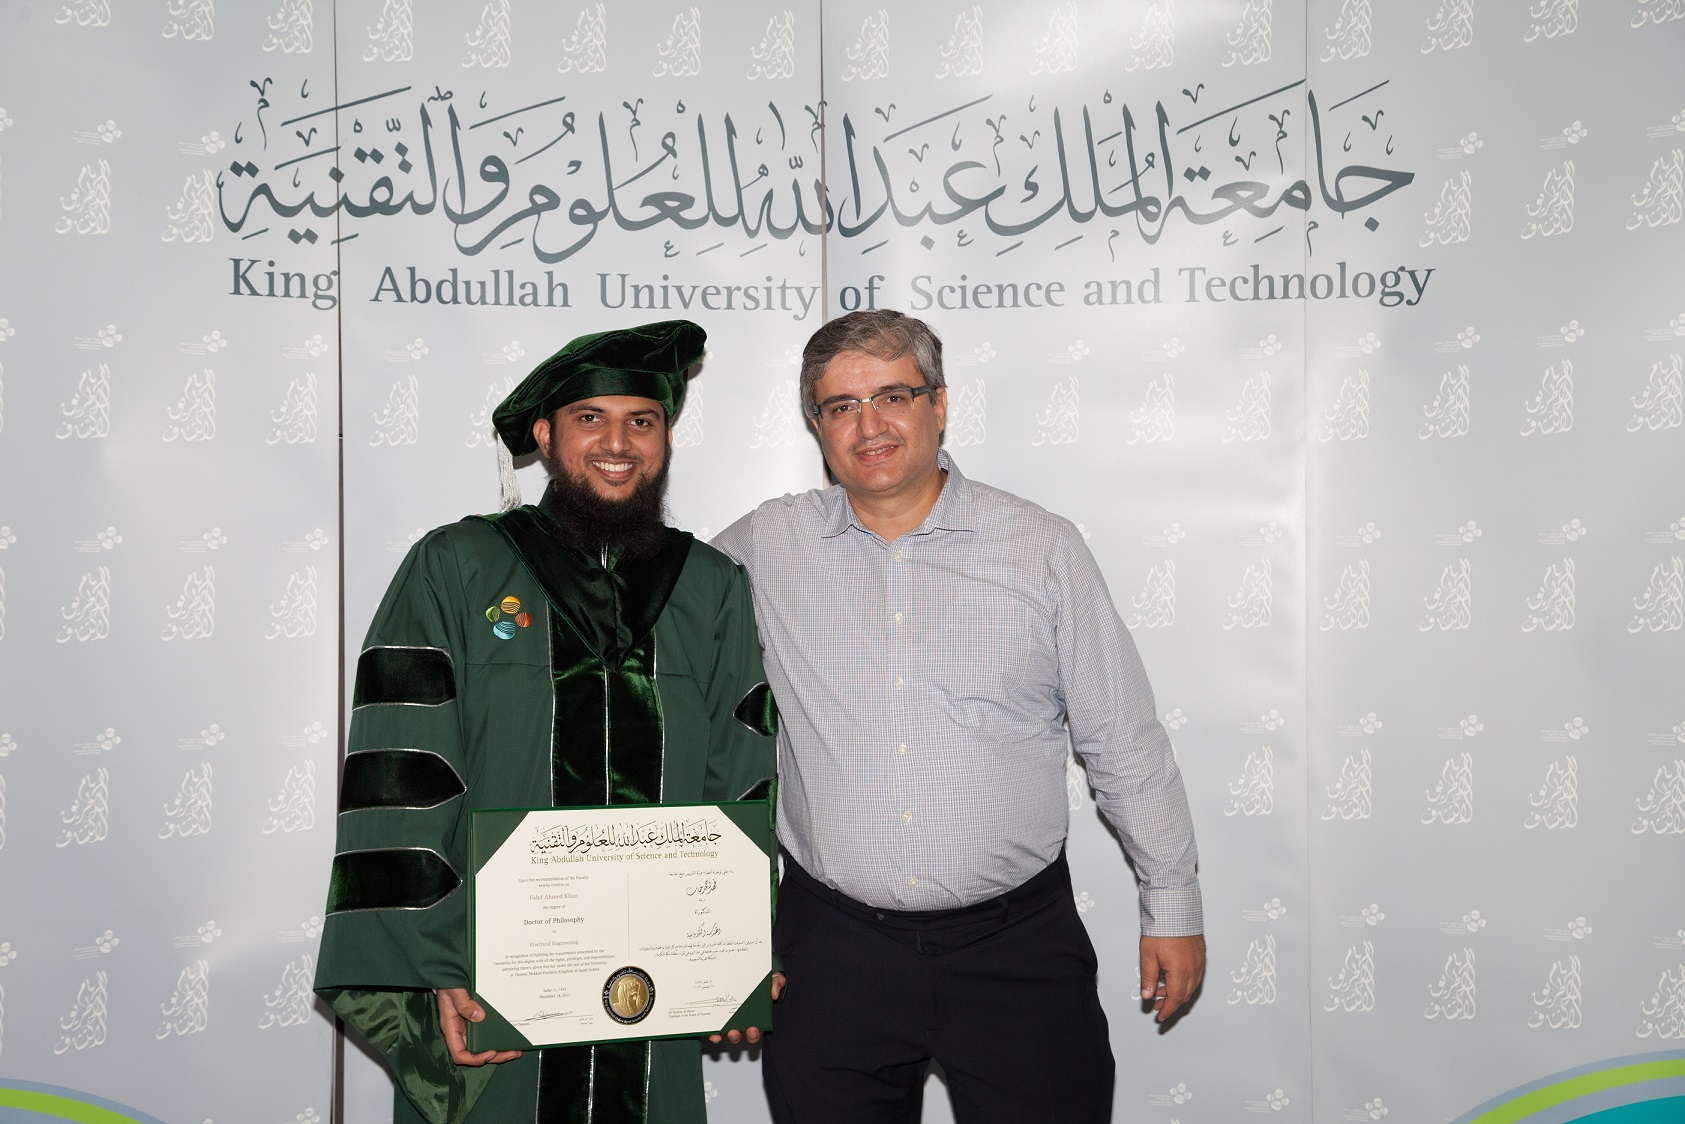 Professor Alouini with Fahd Khan during graduation ceremony2